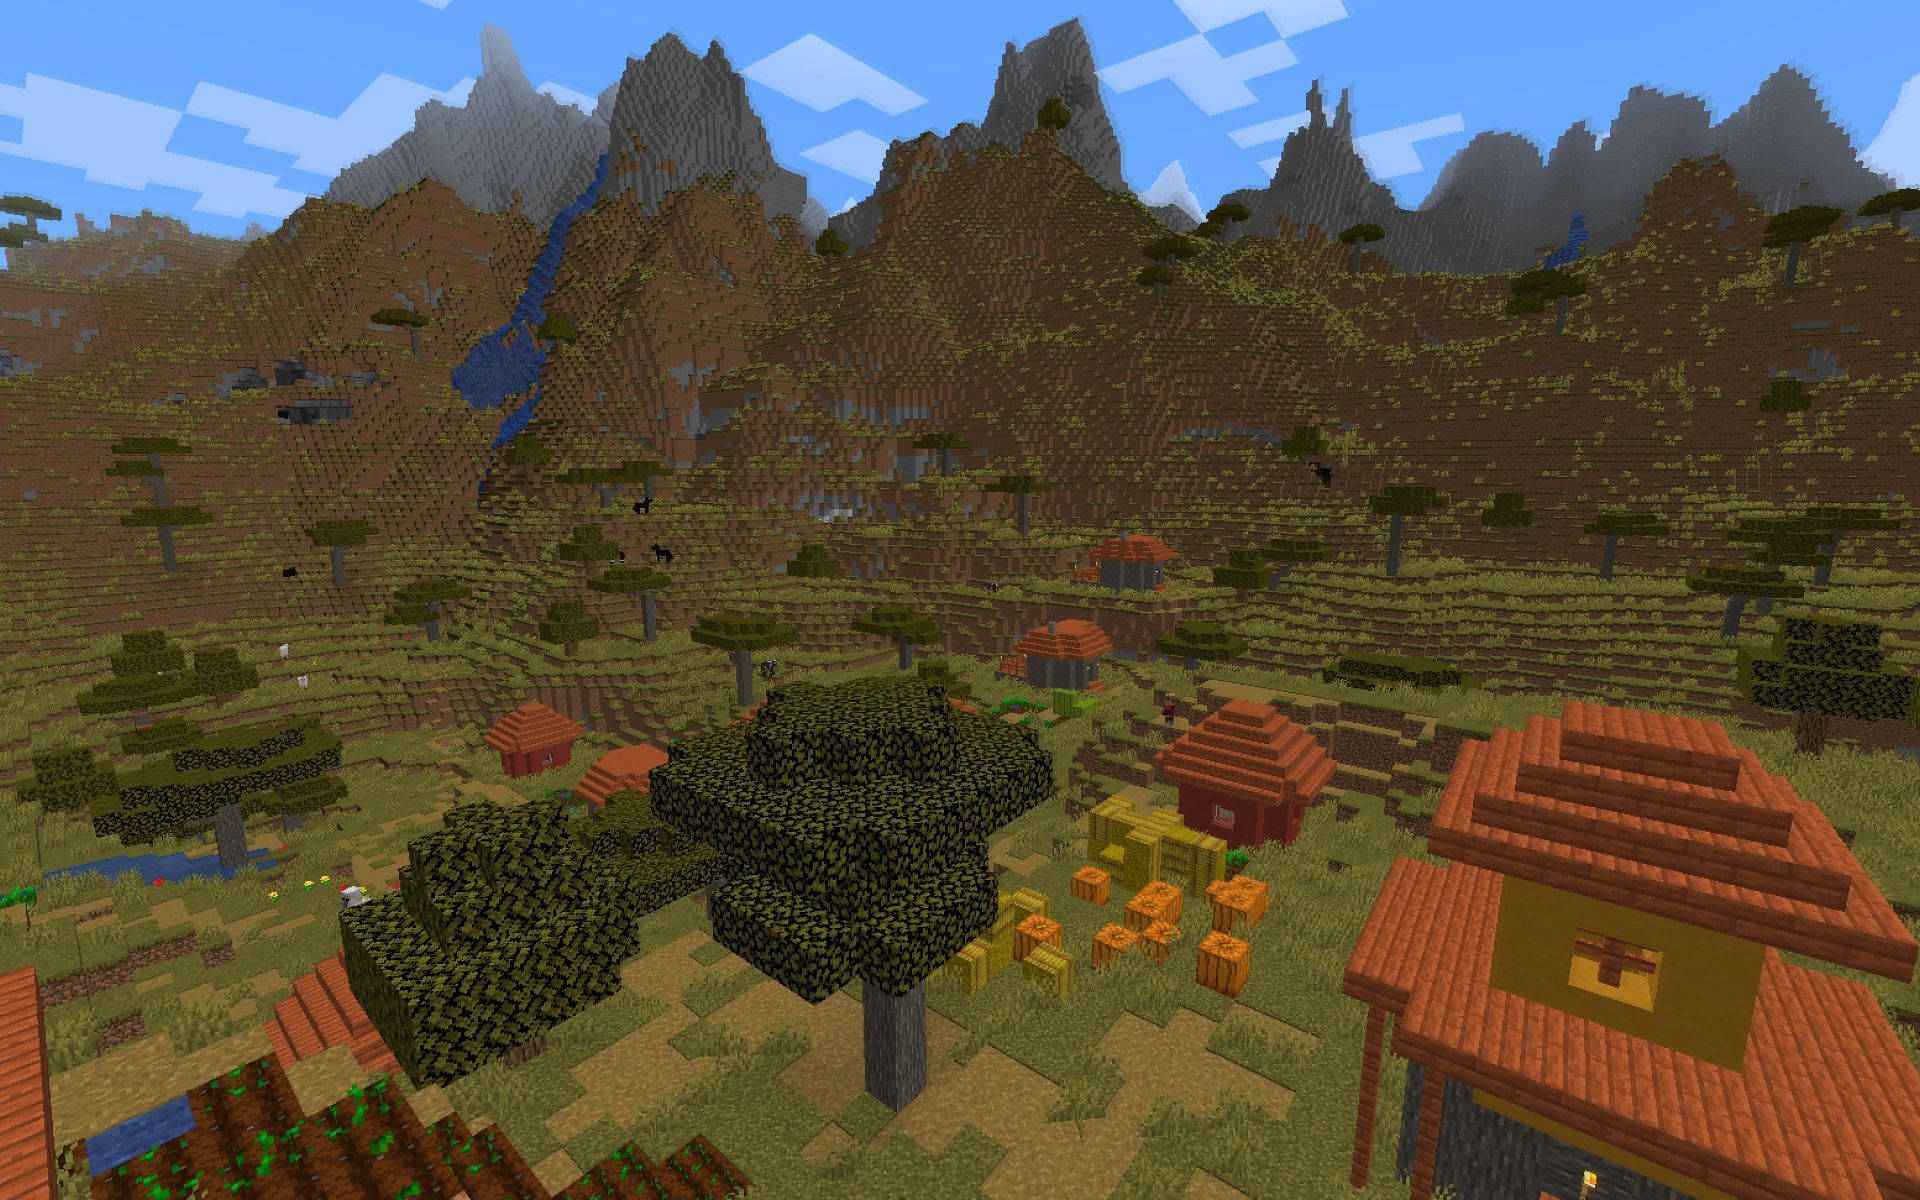 A player overlooks a savanna village in-game. (Image via Minecraft)